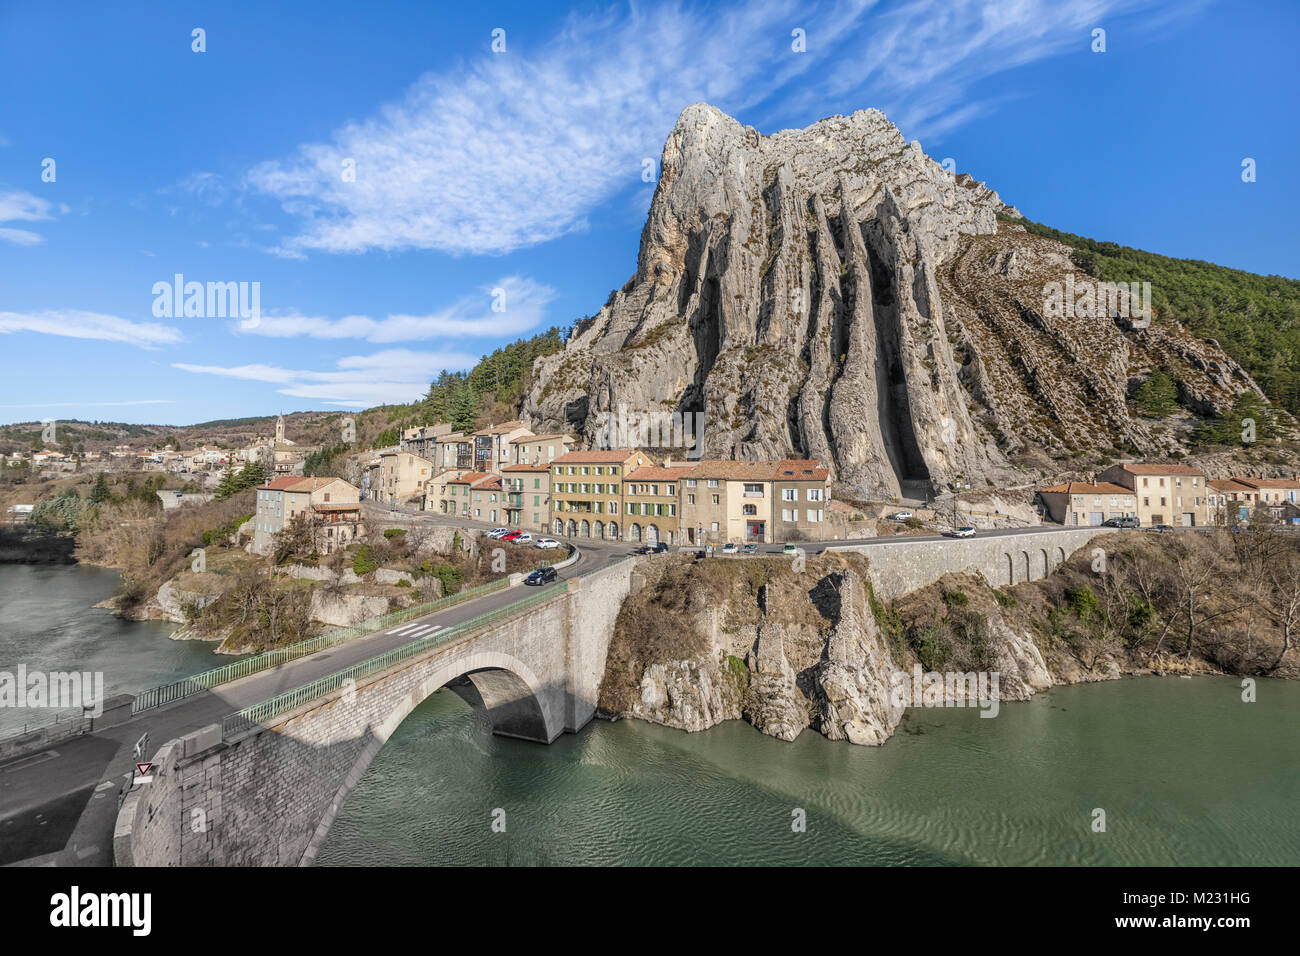 Rocher de la Baume - unusual shaped rock in Sisteron, Alpes-de-Haute-Provence, France Stock Photo